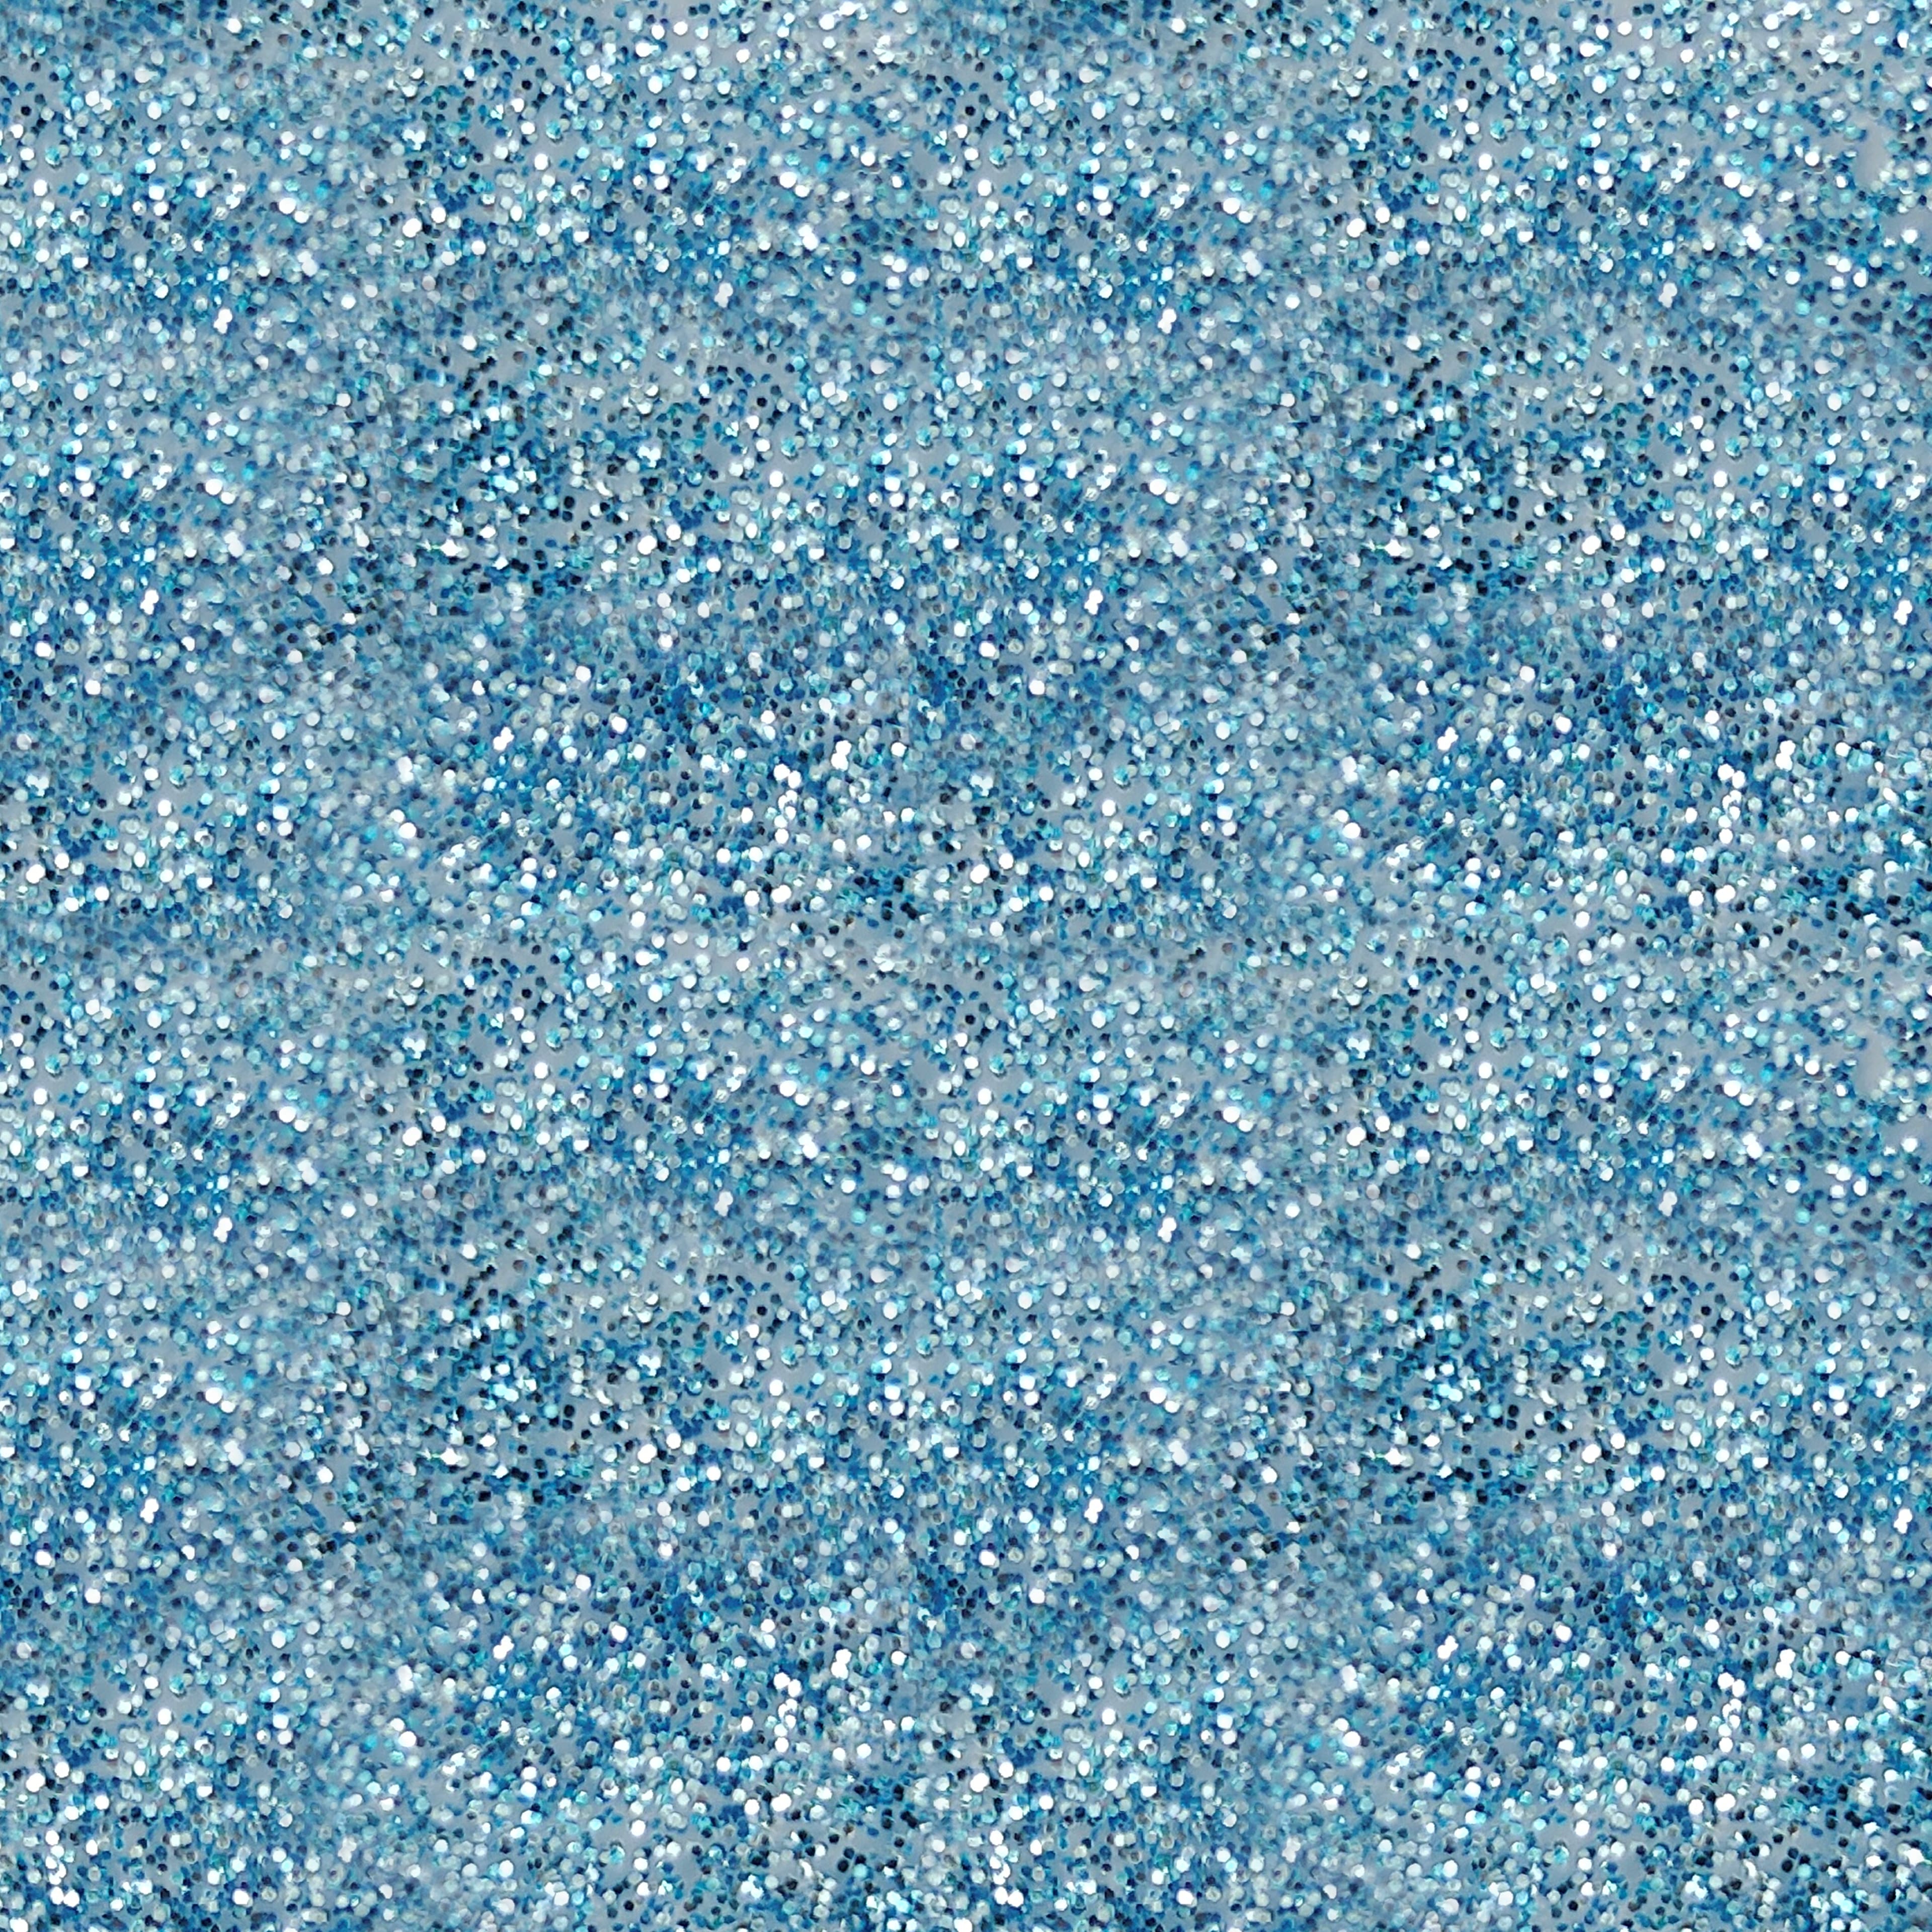 3.96oz. Light Blue Pearlized Glitter Glue by Creatology&#x2122;